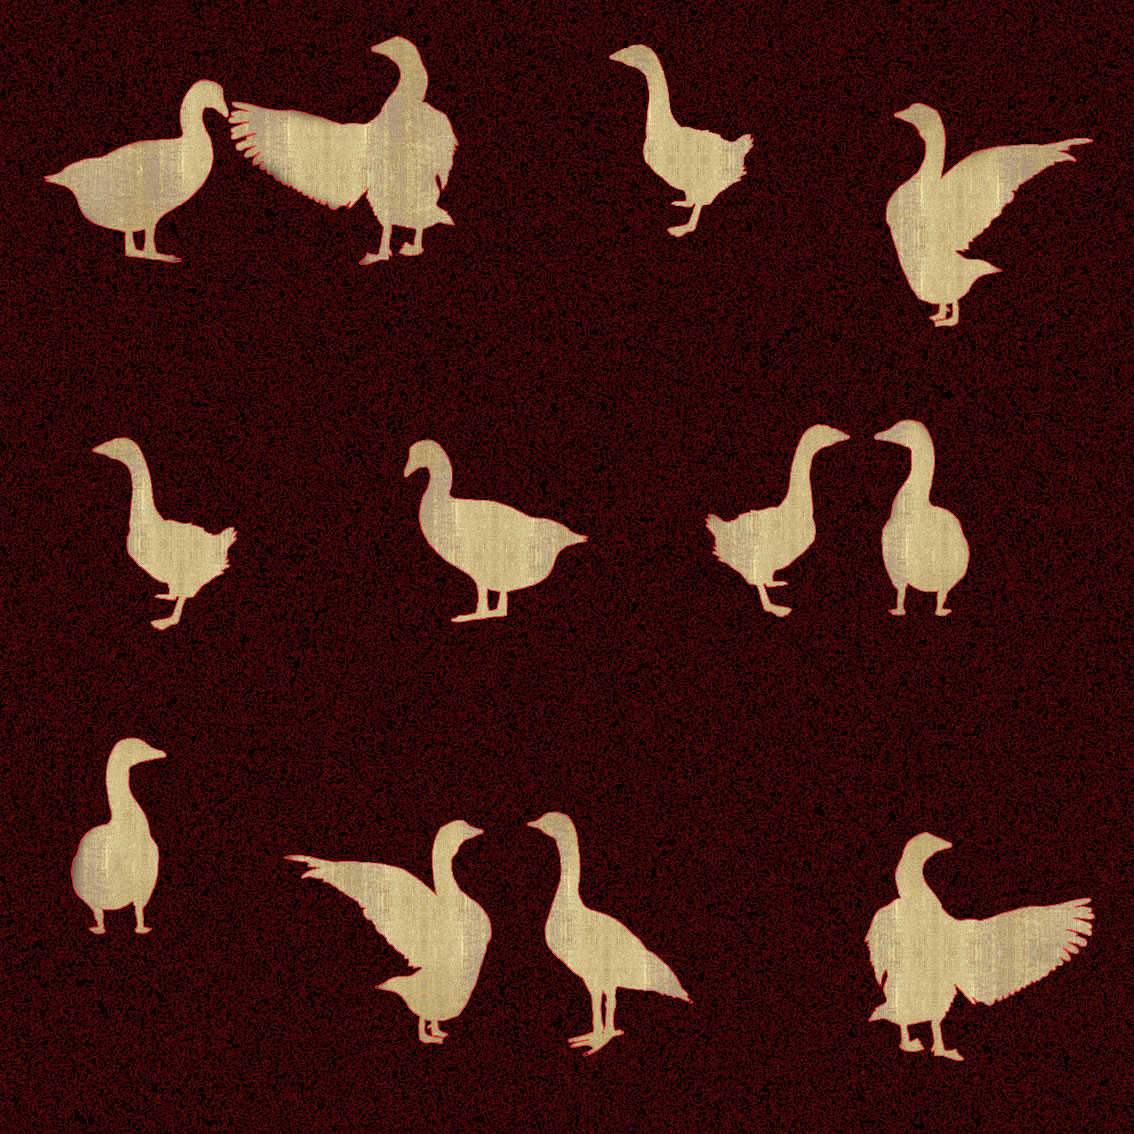 Golden-geese  Thierry Bisch Contemporary painter animals painting art decoration nature biodiversity conservation